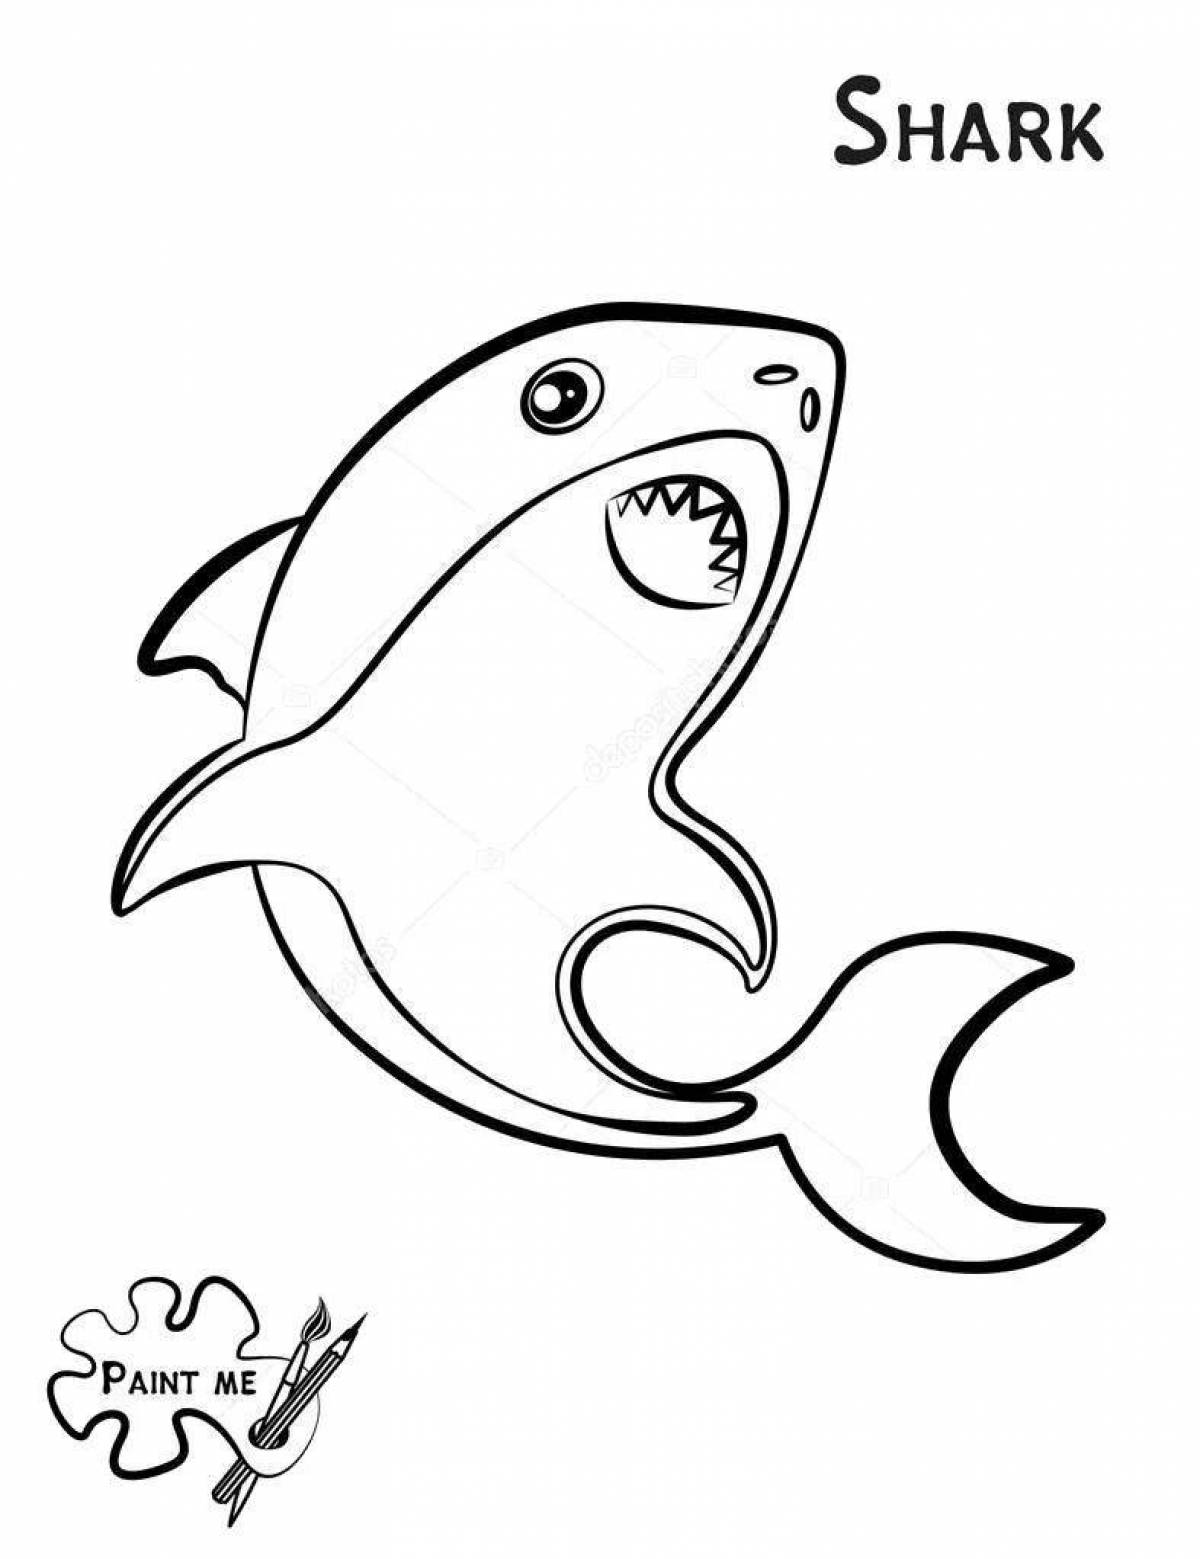 Great ikea shark coloring book